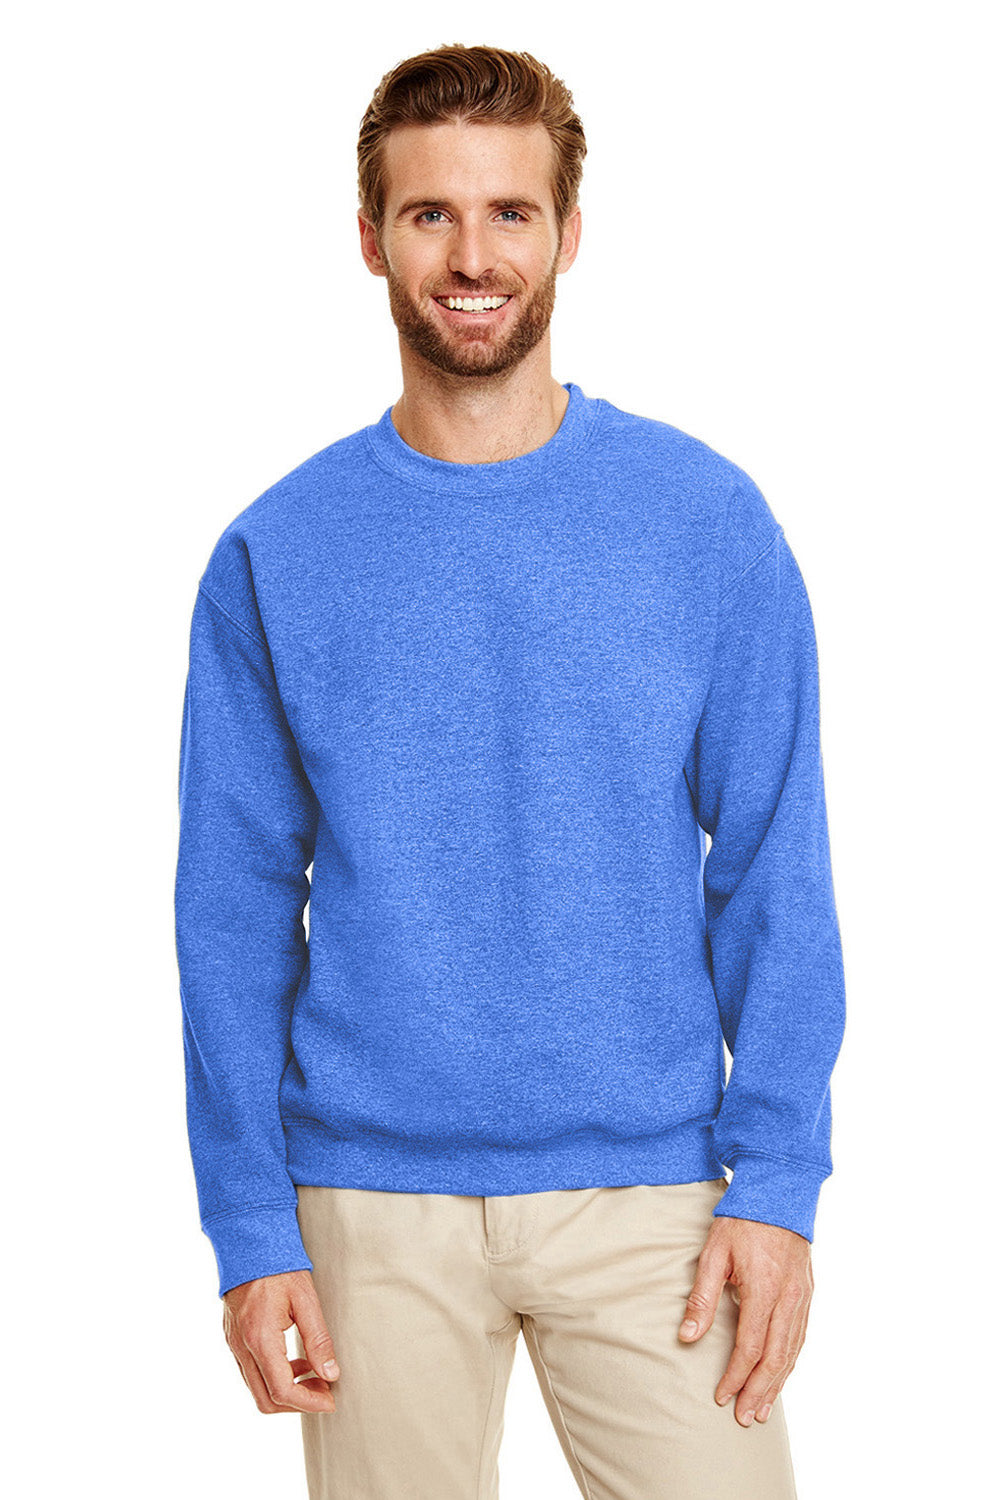 Gildan Mens Pill Resistant Fleece Crewneck Sweatshirt - Heather Royal Blue